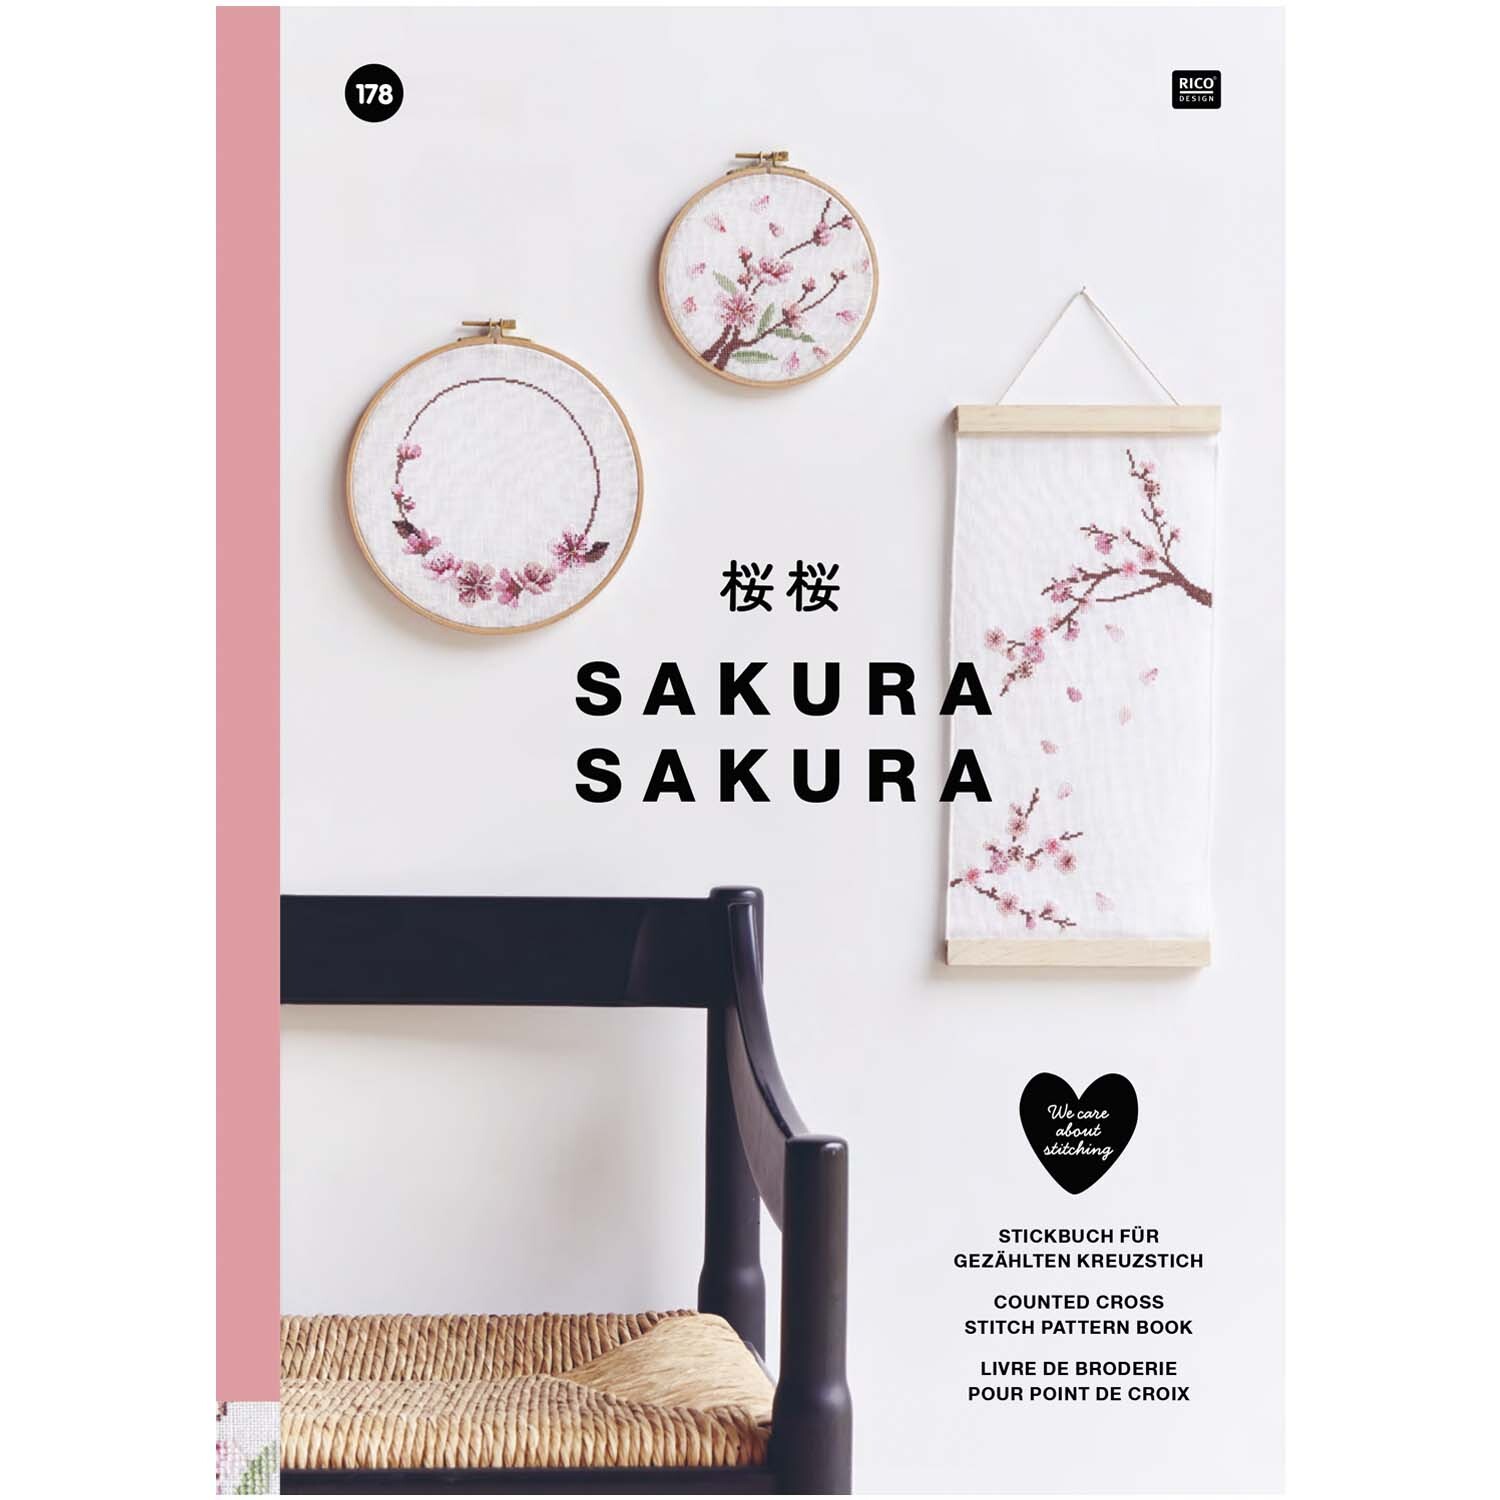 Stickbuch Sakura Sakura Nr. 178